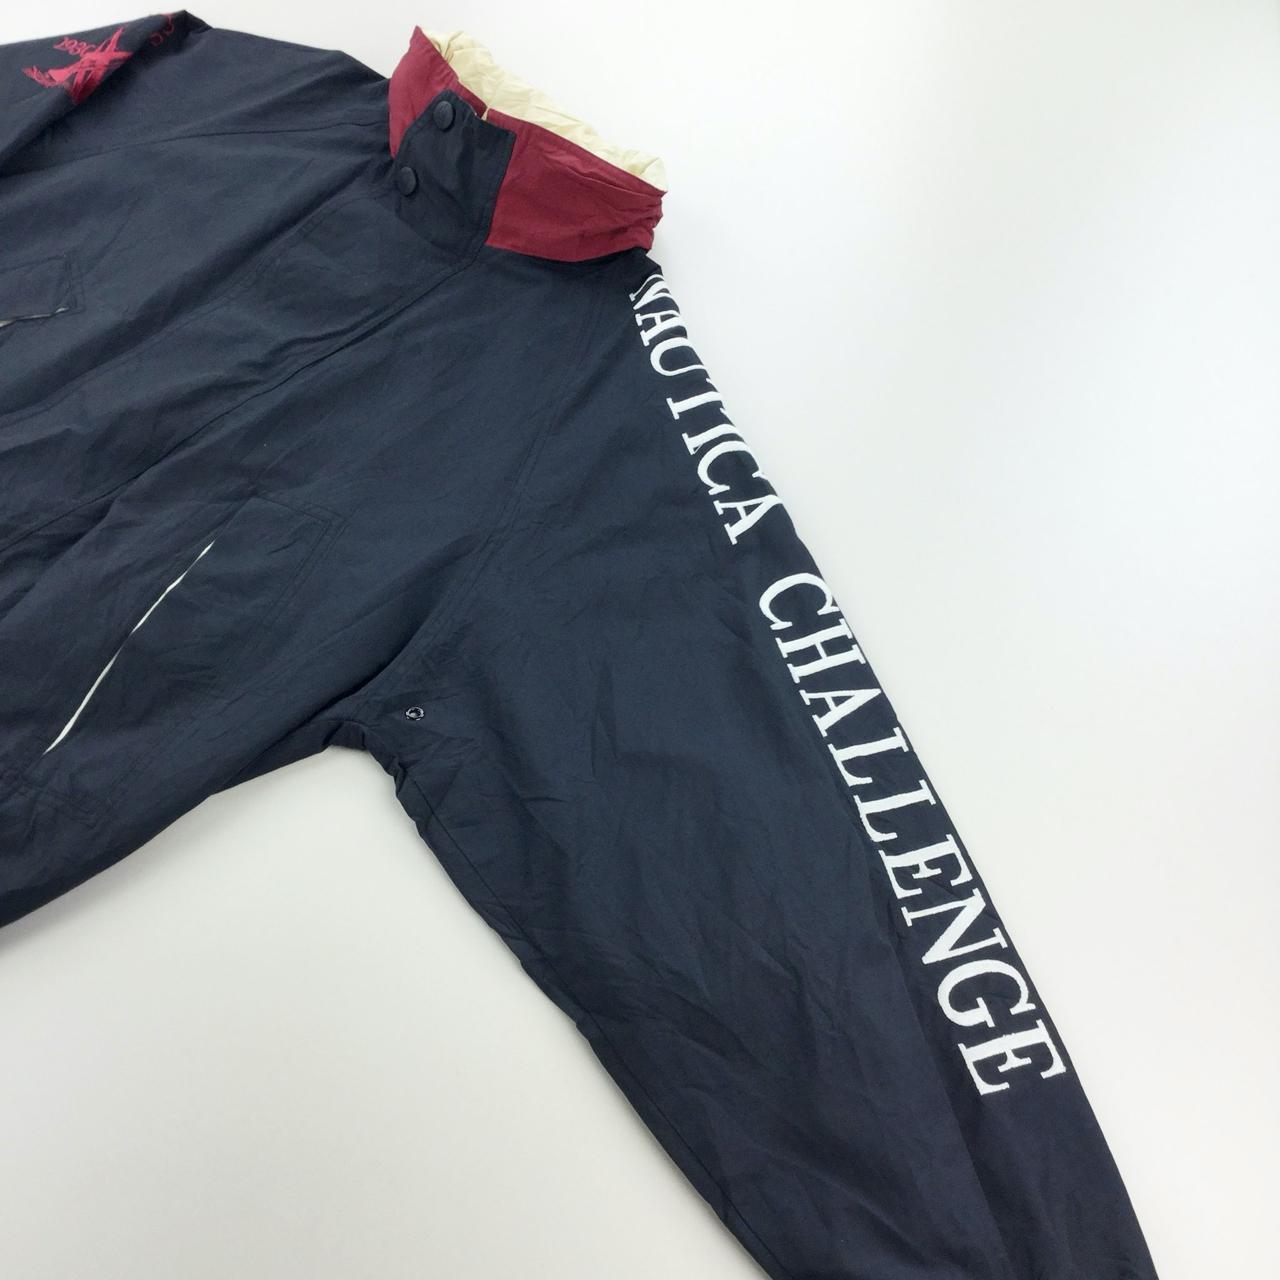 Vintage Nautica Challenge Jacket Condition: pre... - Depop